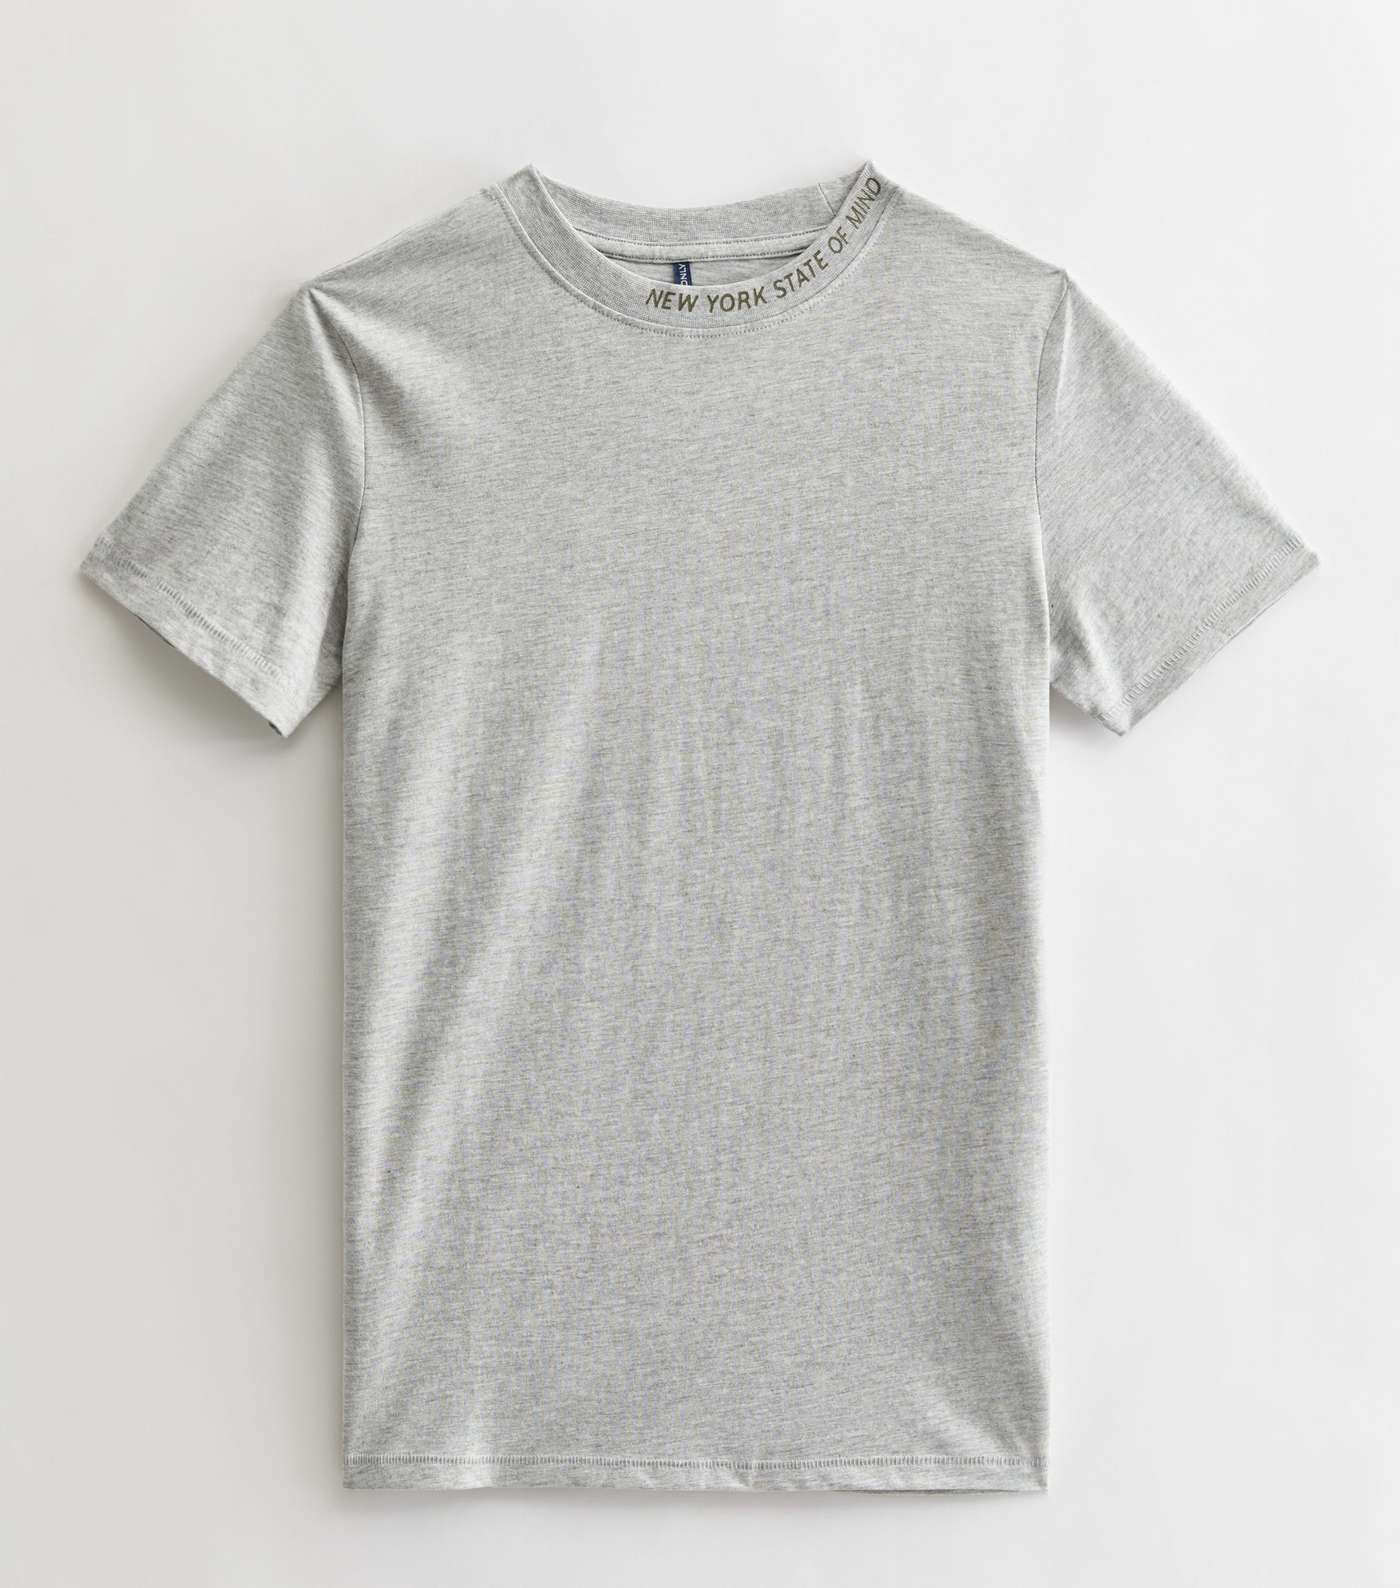 KIDS ONLY Grey Marl Crew Neck Short Sleeve New York T Shirt Image 5